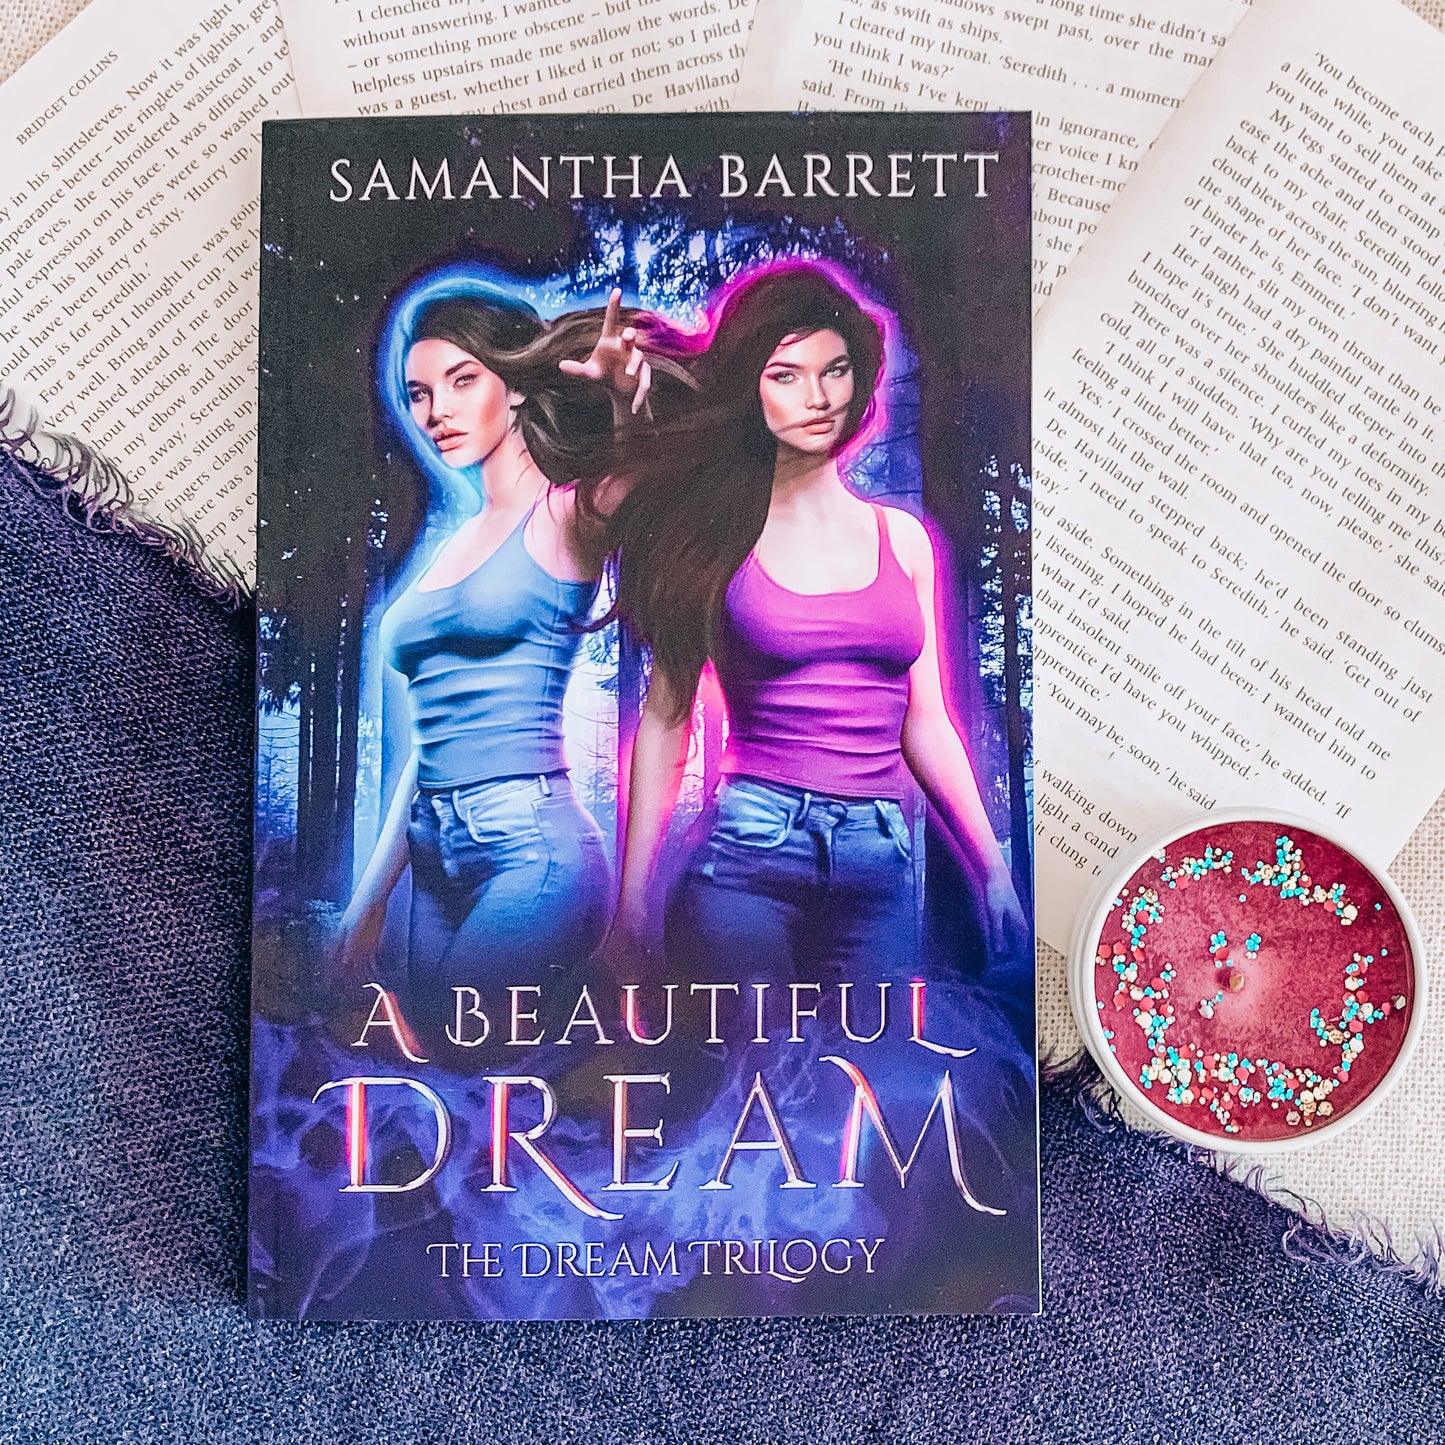 The Dream Trilogy Series by Samantha Barrett